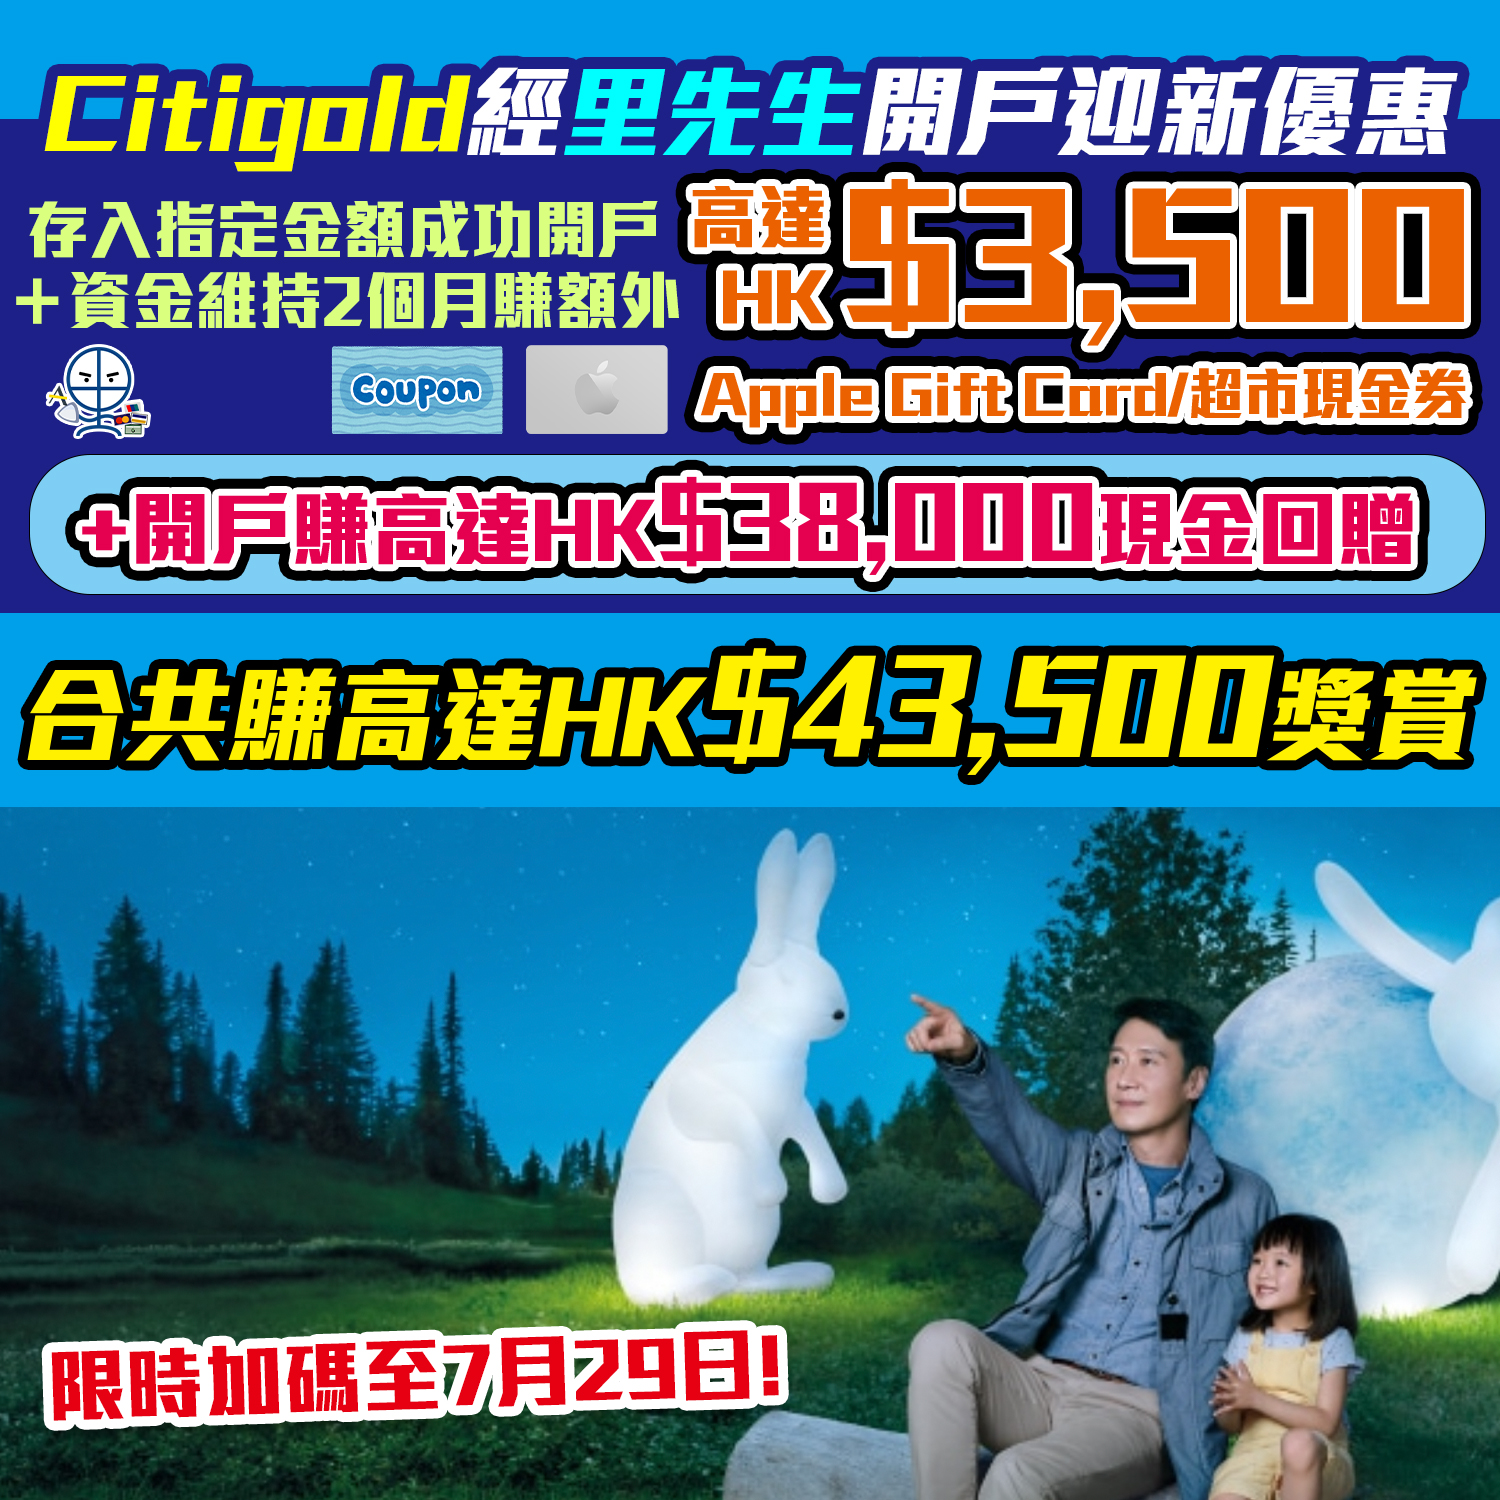 citigold-3-500-apple-hk-38-000-si